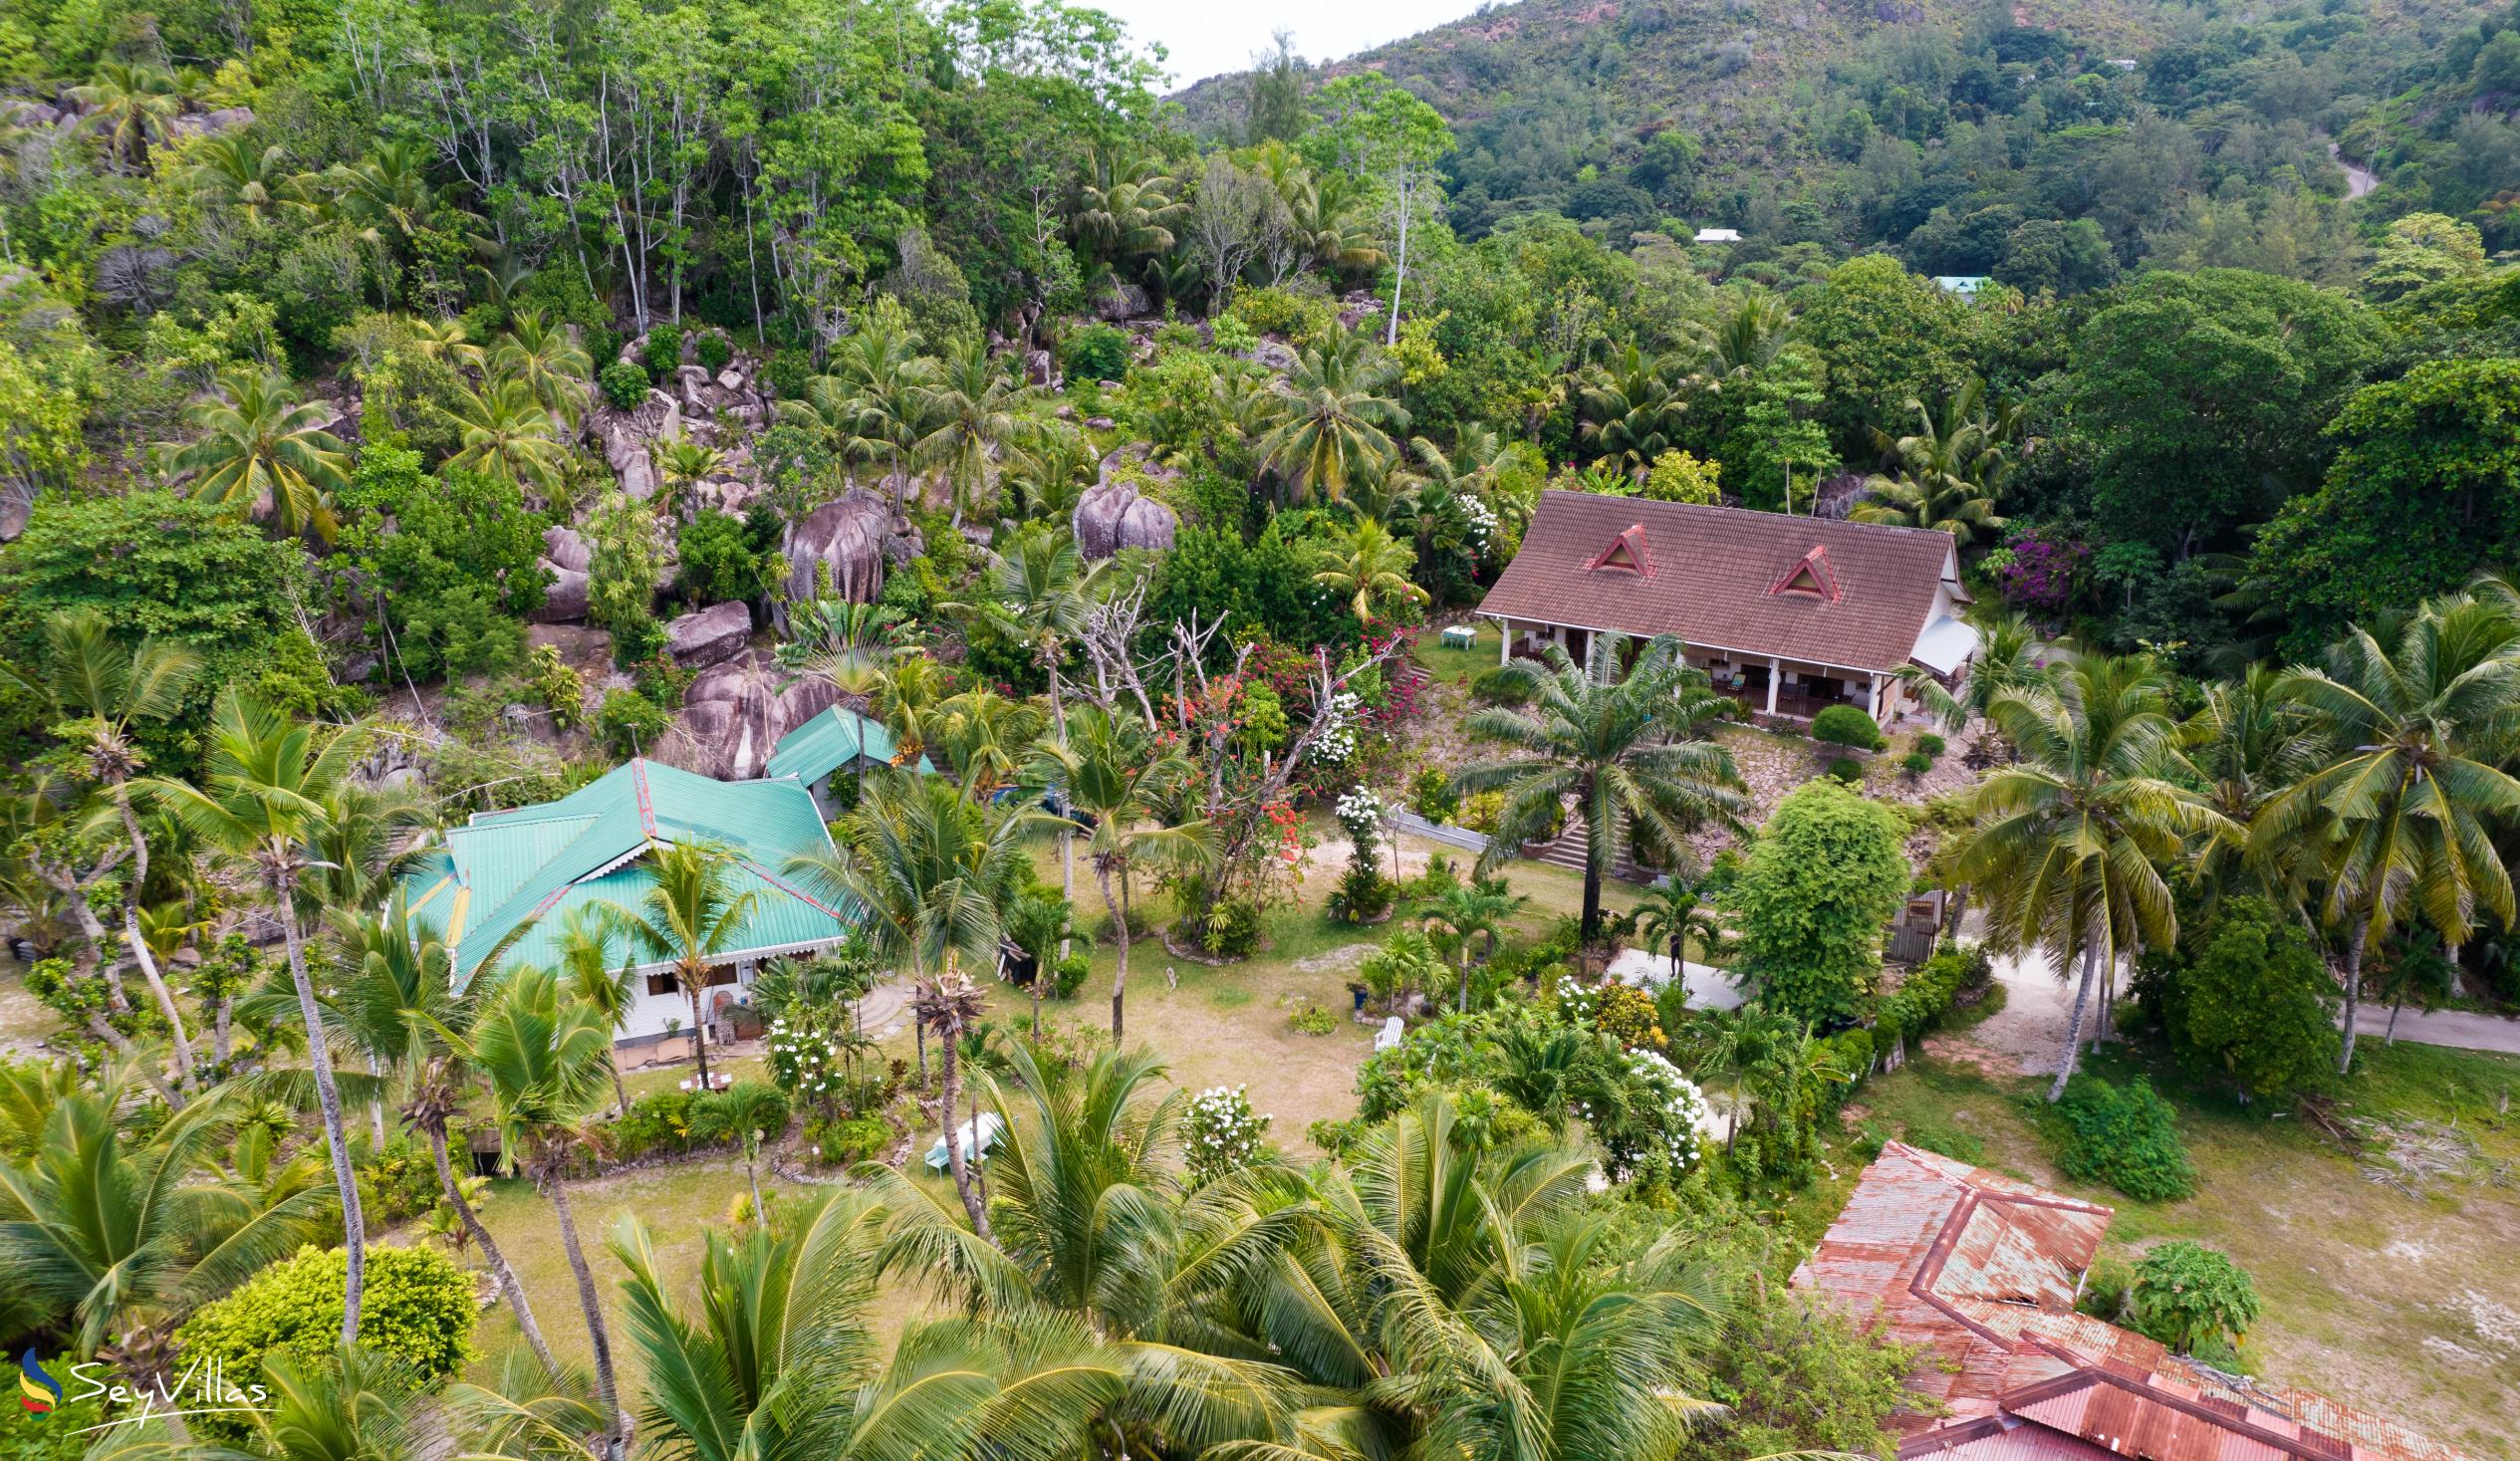 Photo 6: Villas du Voyageur - Outdoor area - Praslin (Seychelles)